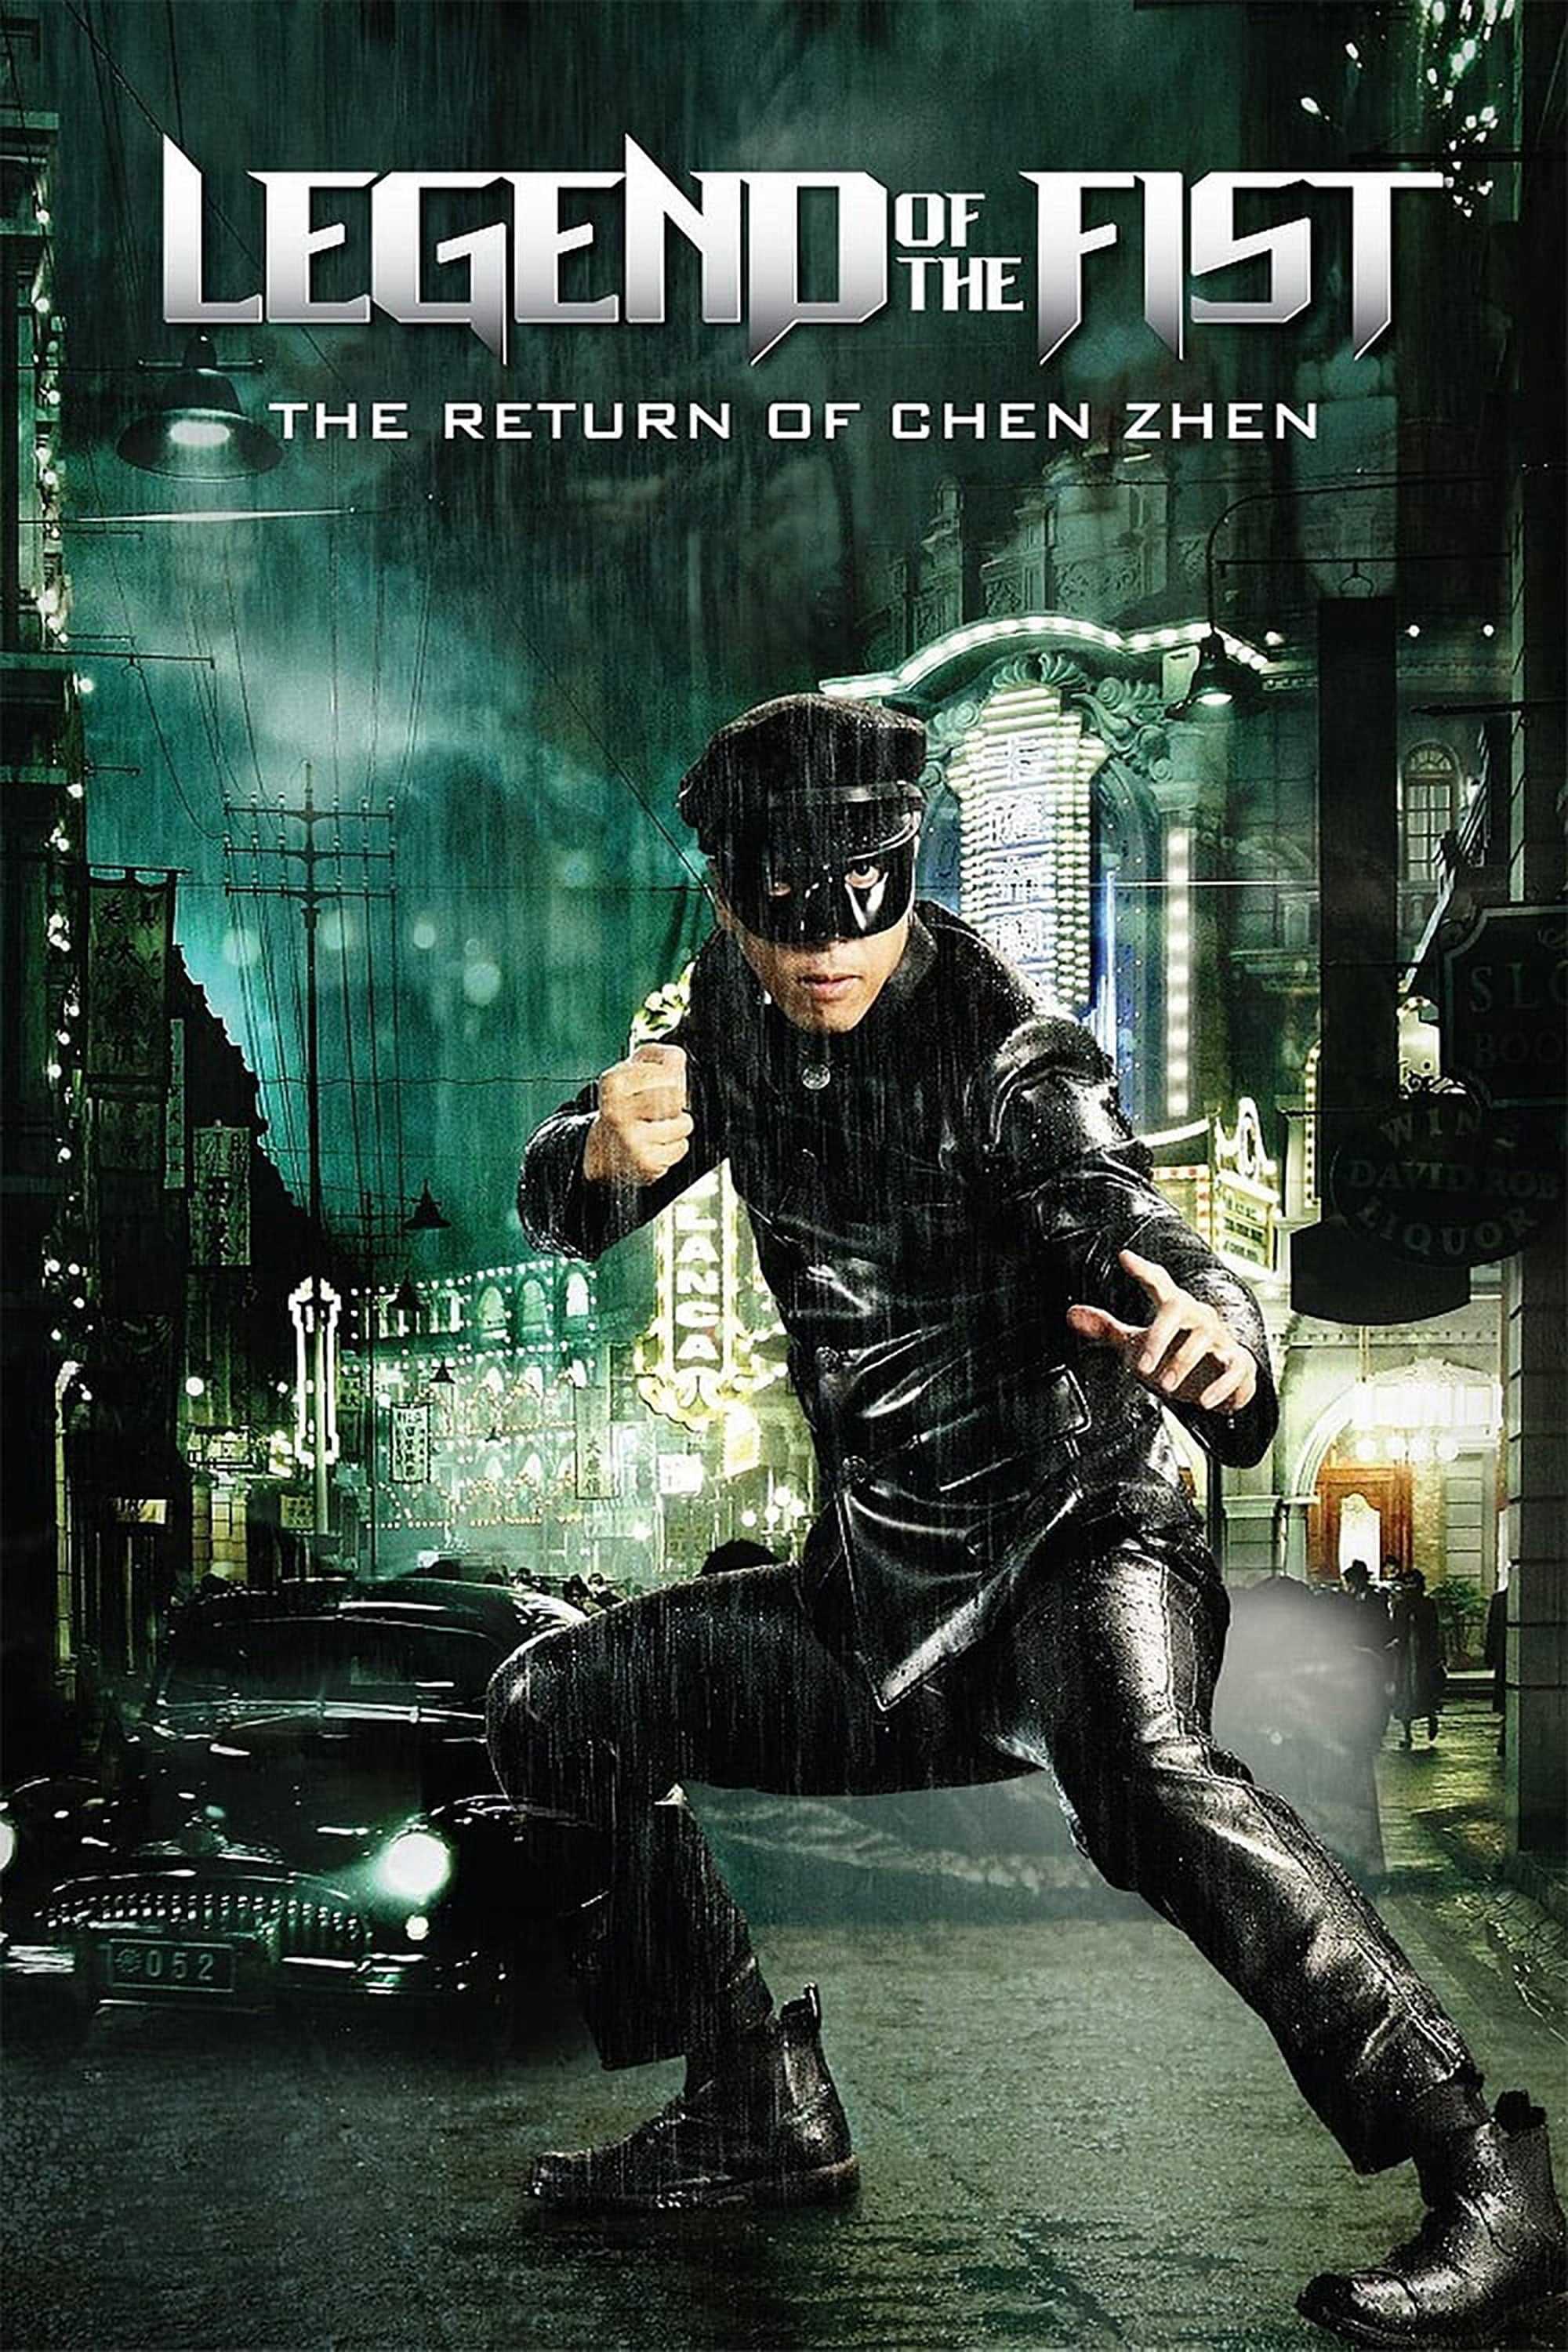 Legend of the fist: the return of chen zhen - Legend of the fist: the return of chen zhen